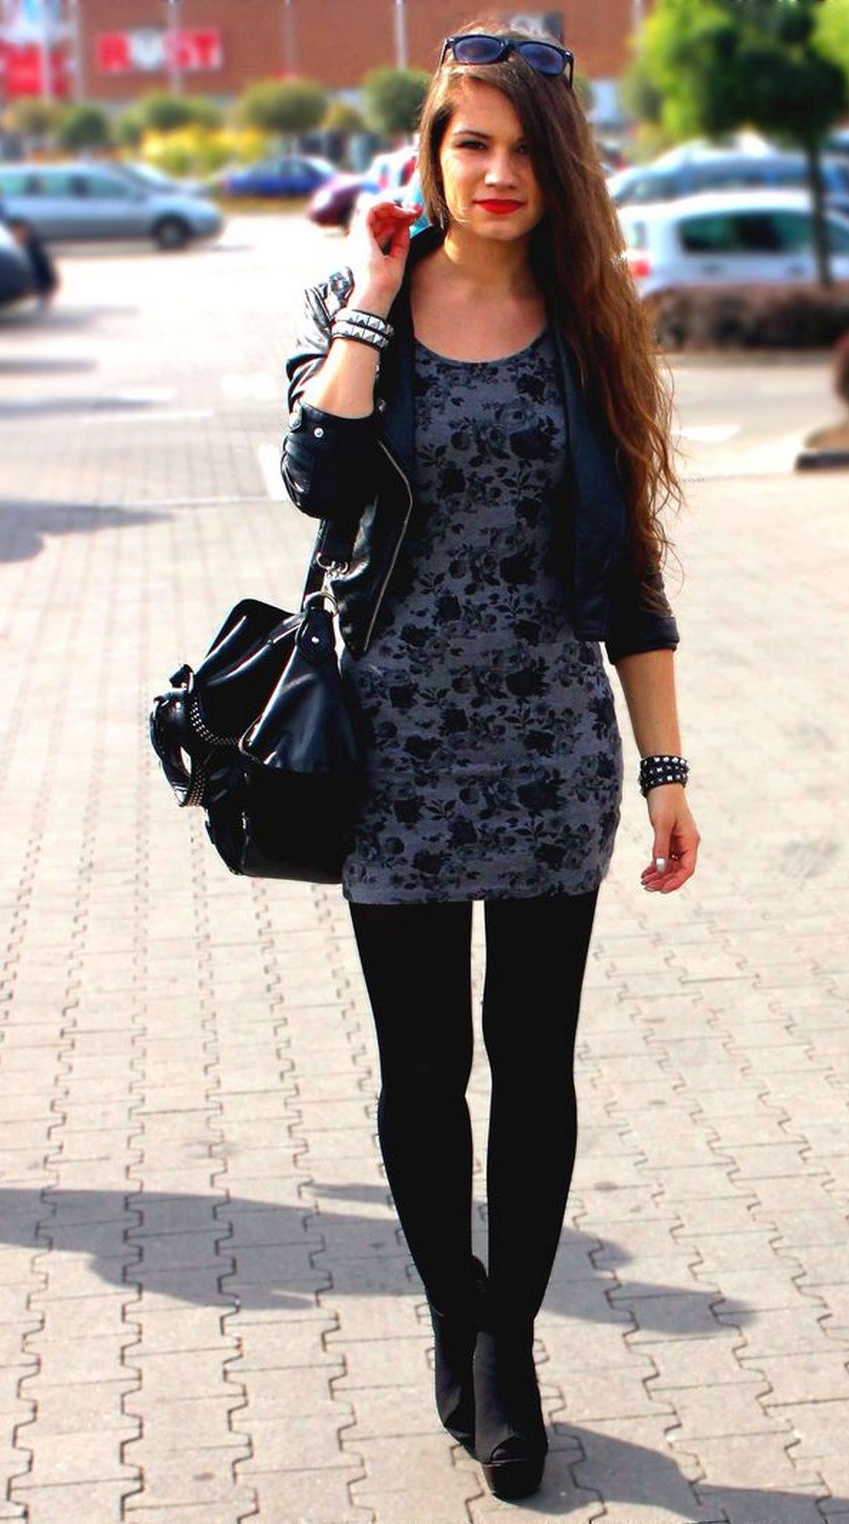 Auburn Young Woman wearing Black Opaque Pantyhose and Blue Cotton Mini Dress